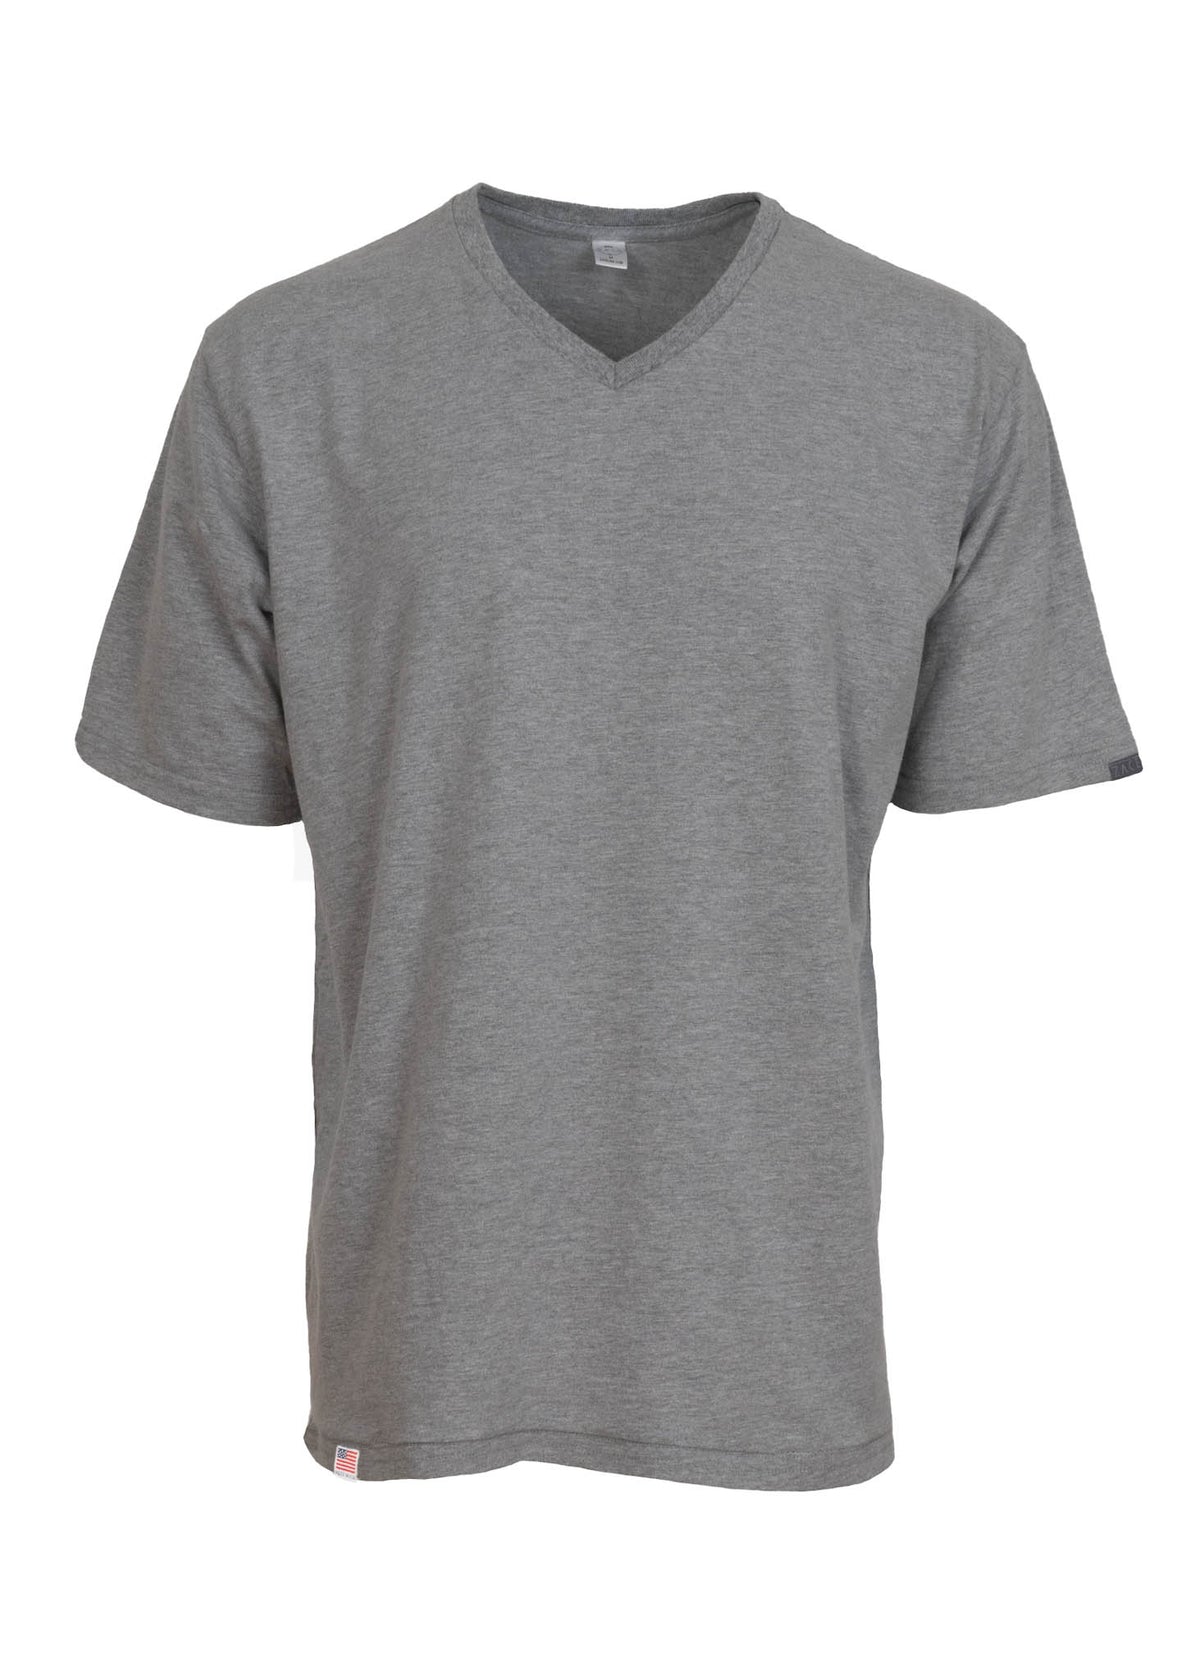 Short Sleeve V-Neck Work Tee Shirt Grey